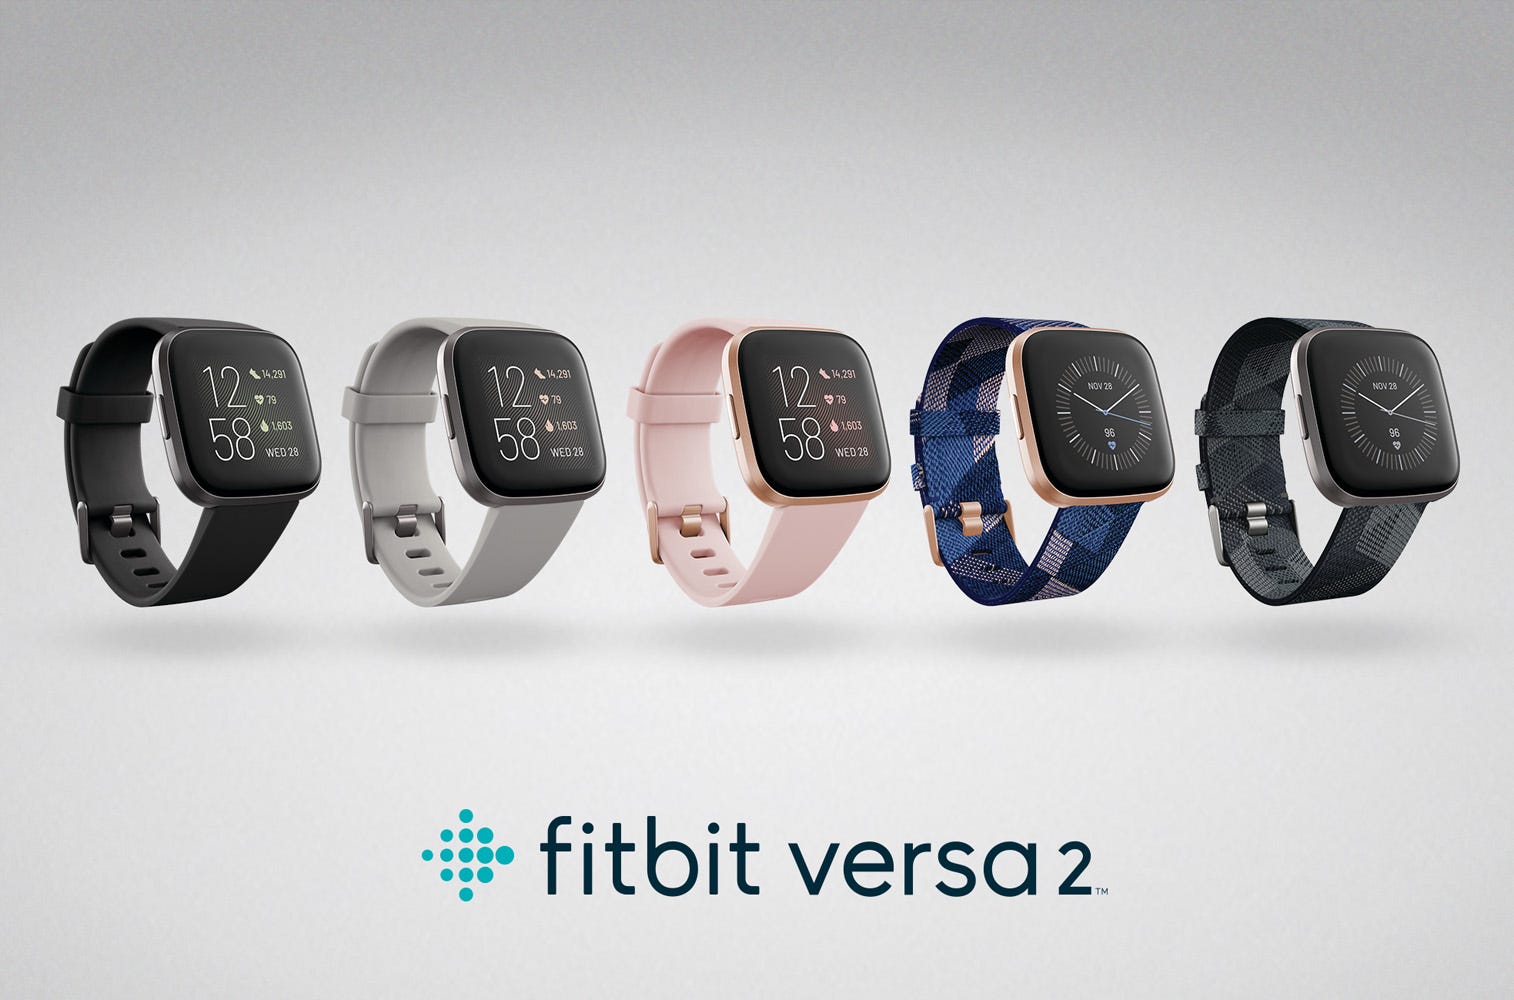 Fitbit Versa 2: Battery life, screen 